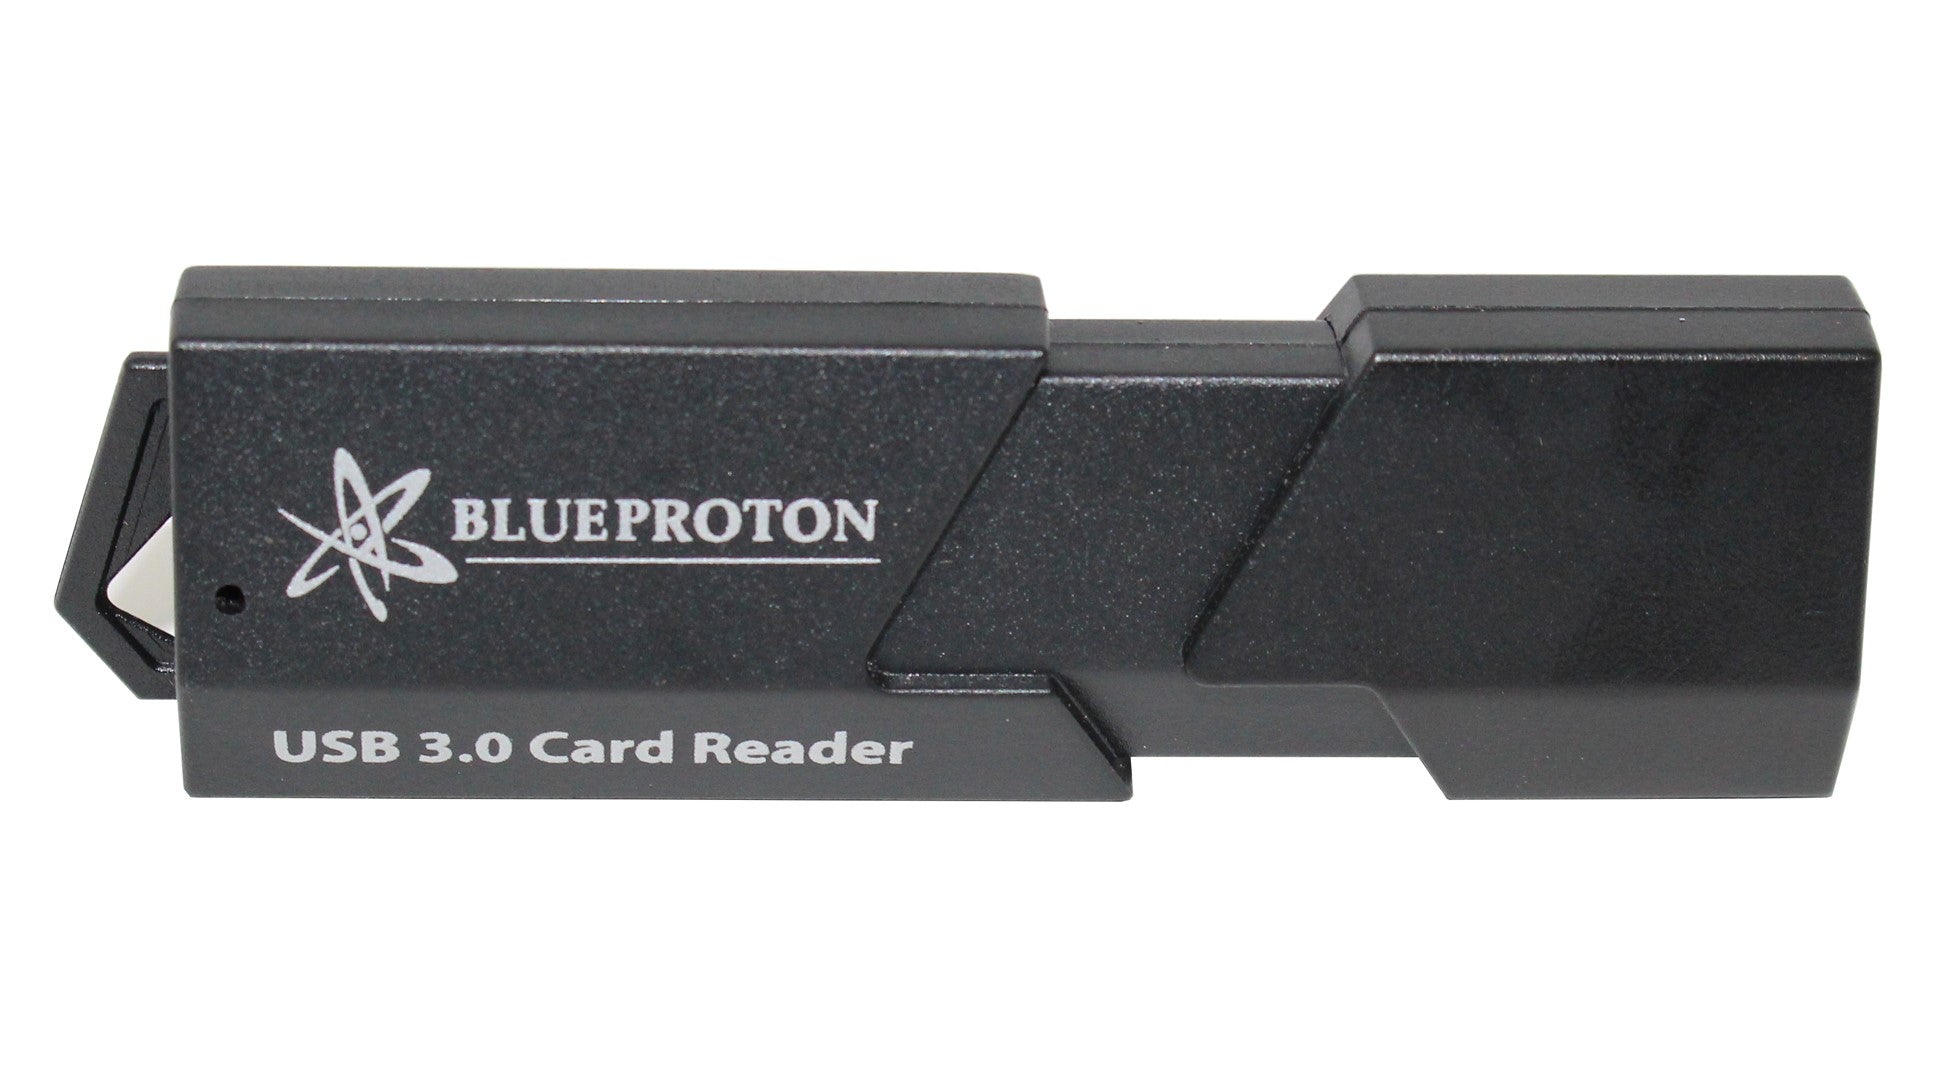 SanDisk 128GB MicroSDXC UHS-I Card for Nintendo Switch Bundle with & BlueProton USB 3.0 MicroSDXC Card Reader